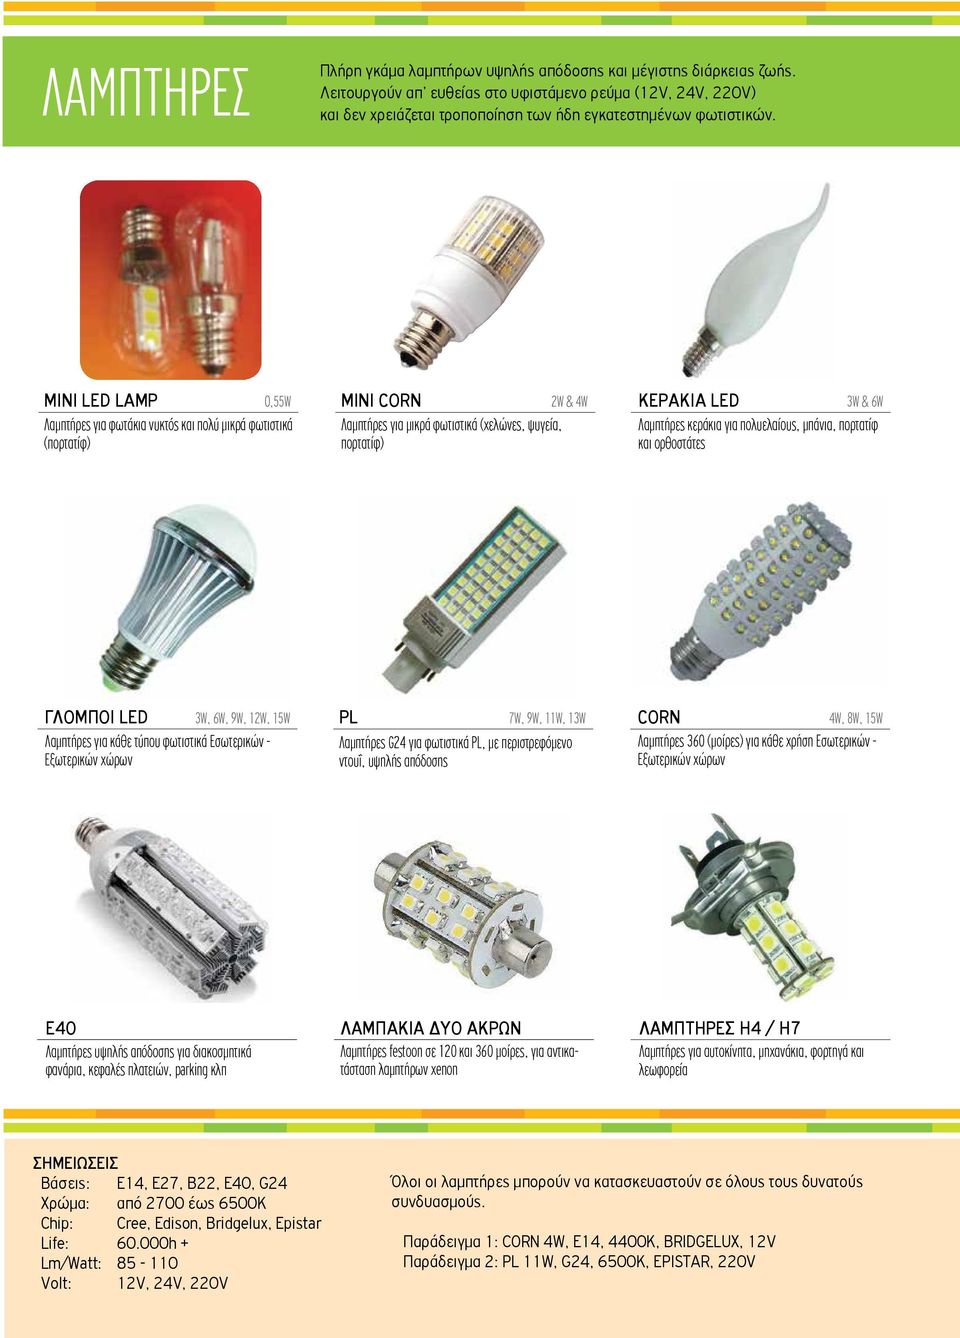 MINI LED LAMP 0,55W MINI CORN 2W & 4W Λαµπτήρες για φωτάκια νυκτός και πολύ µικρά φωτιστικά (πορτατίφ) Λαµπτήρες για µικρά φωτιστικά (χελώνες, ψυγεία, πορτατίφ) ΚΕΡΑΚΙΑ LED 3W & 6W Λαµπτήρες κεράκια